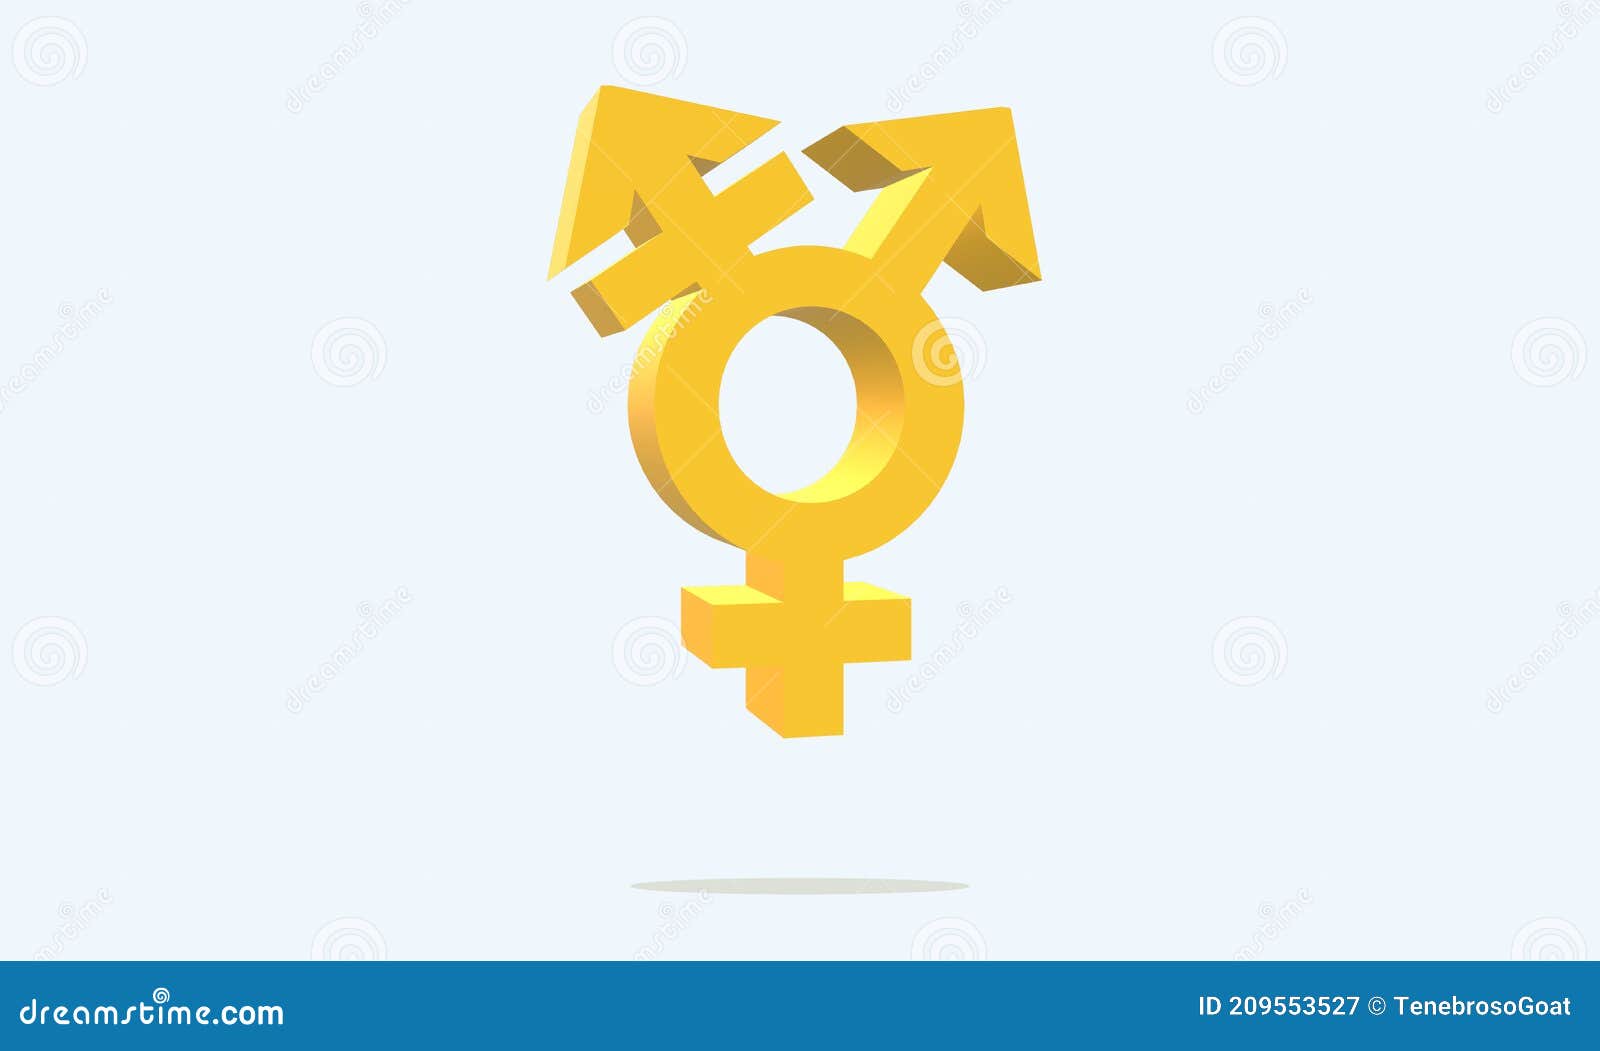 universal symbol for female